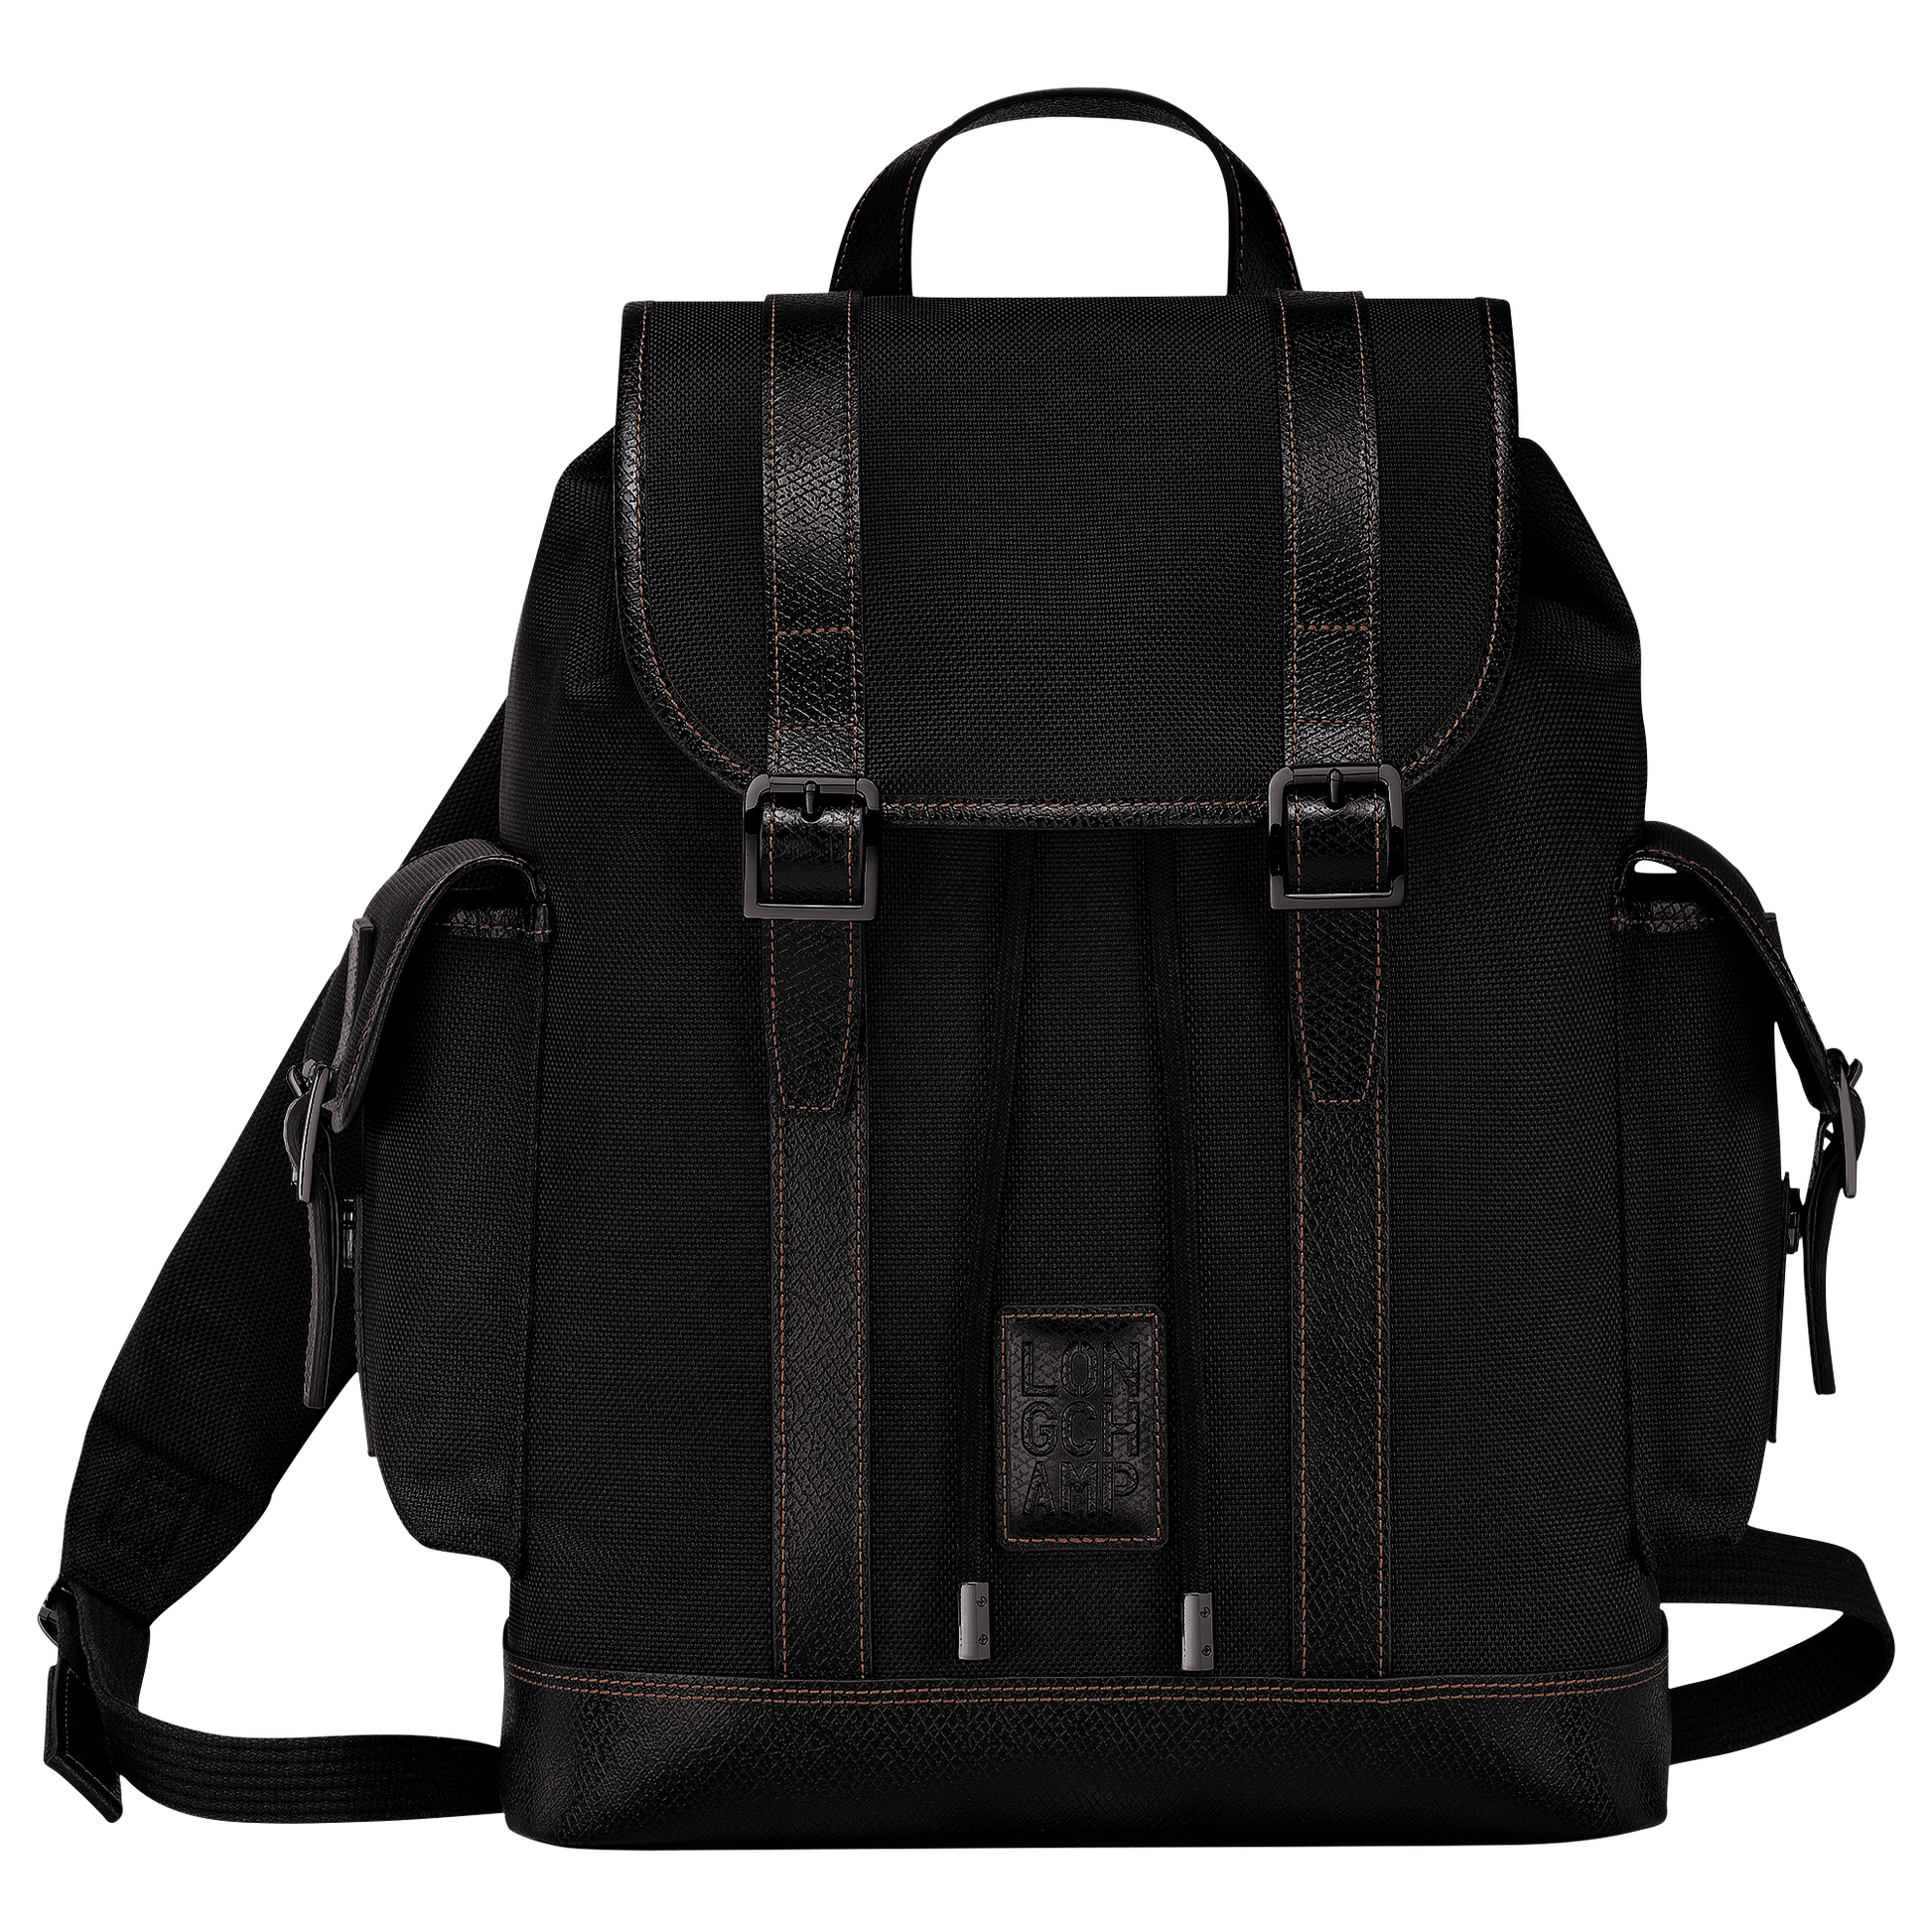 Longchamp BOXFORD - Backpack in Black - 1 (SKU: 20035080001)